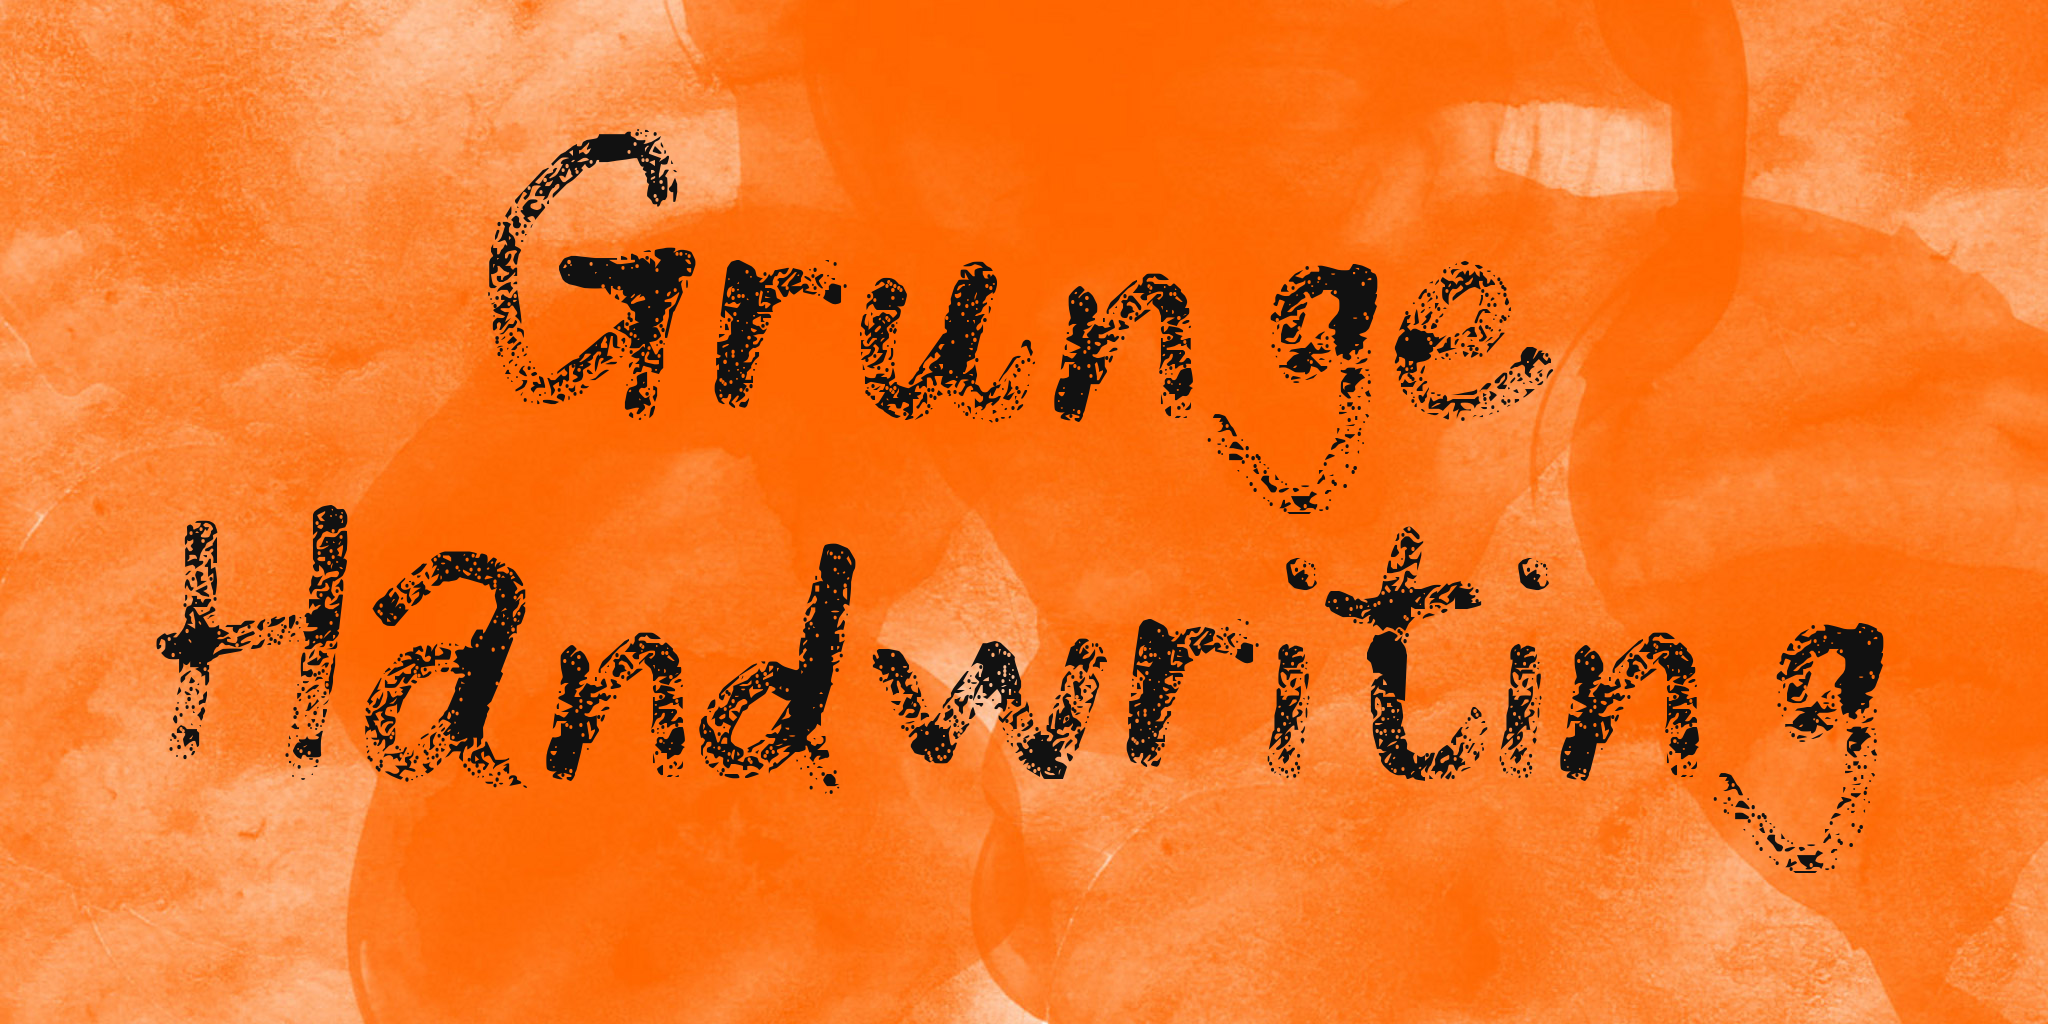 Grunge Handwriting